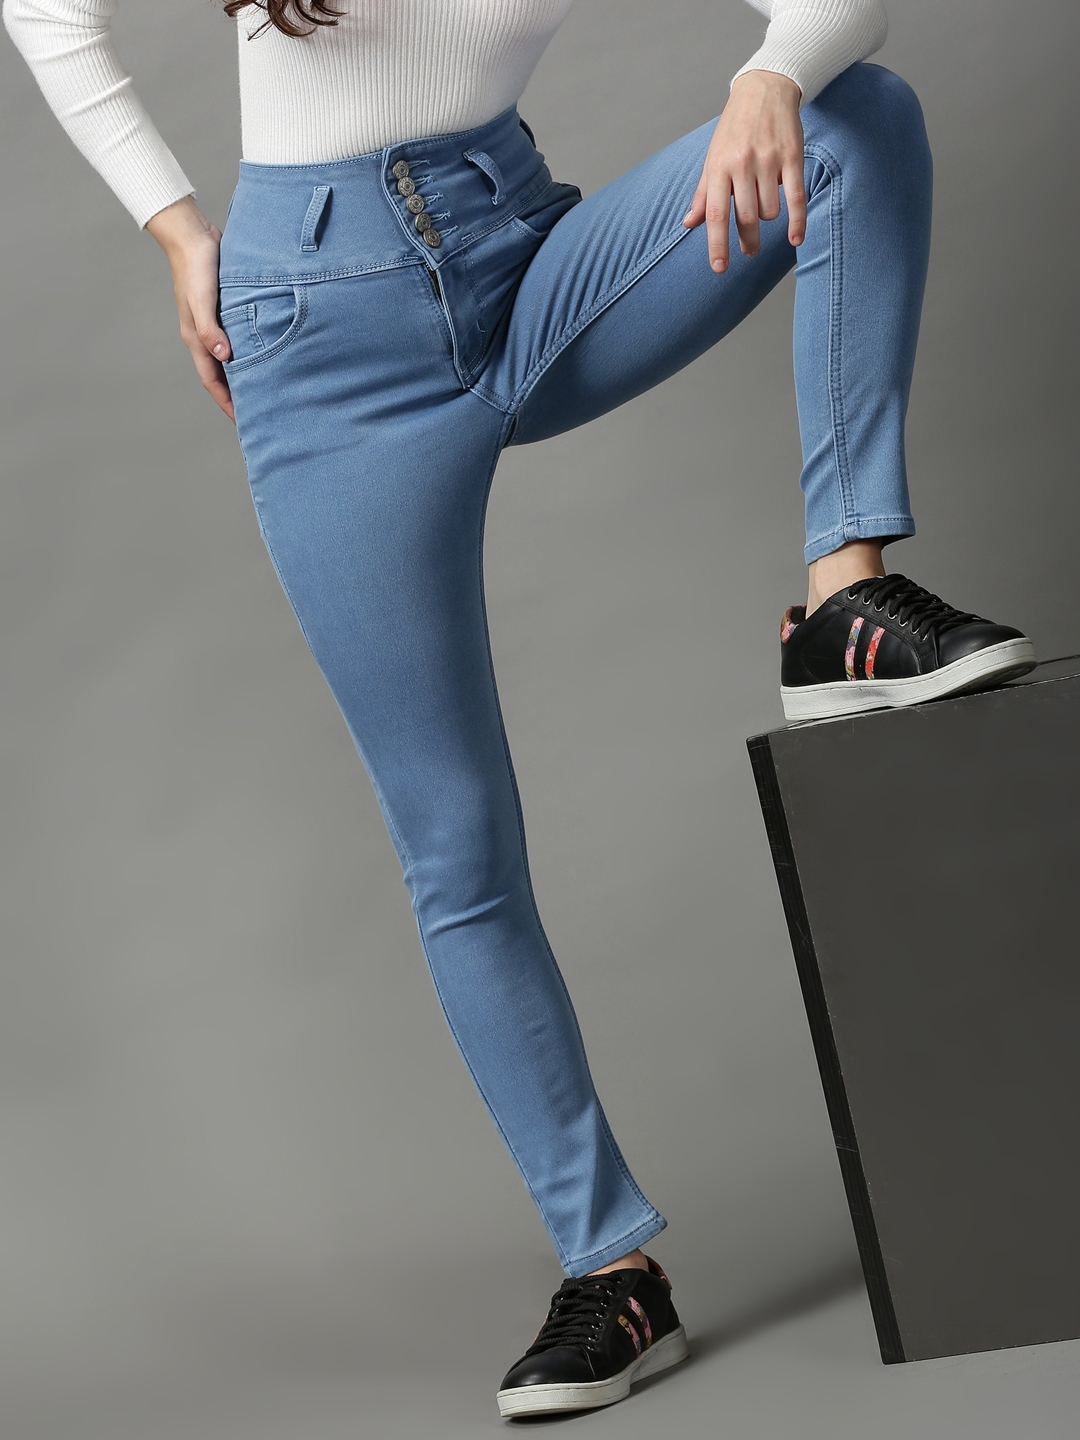 Showoff | SHOWOFF Women's Clean Look Skinny Fit Blue Denim Jeans